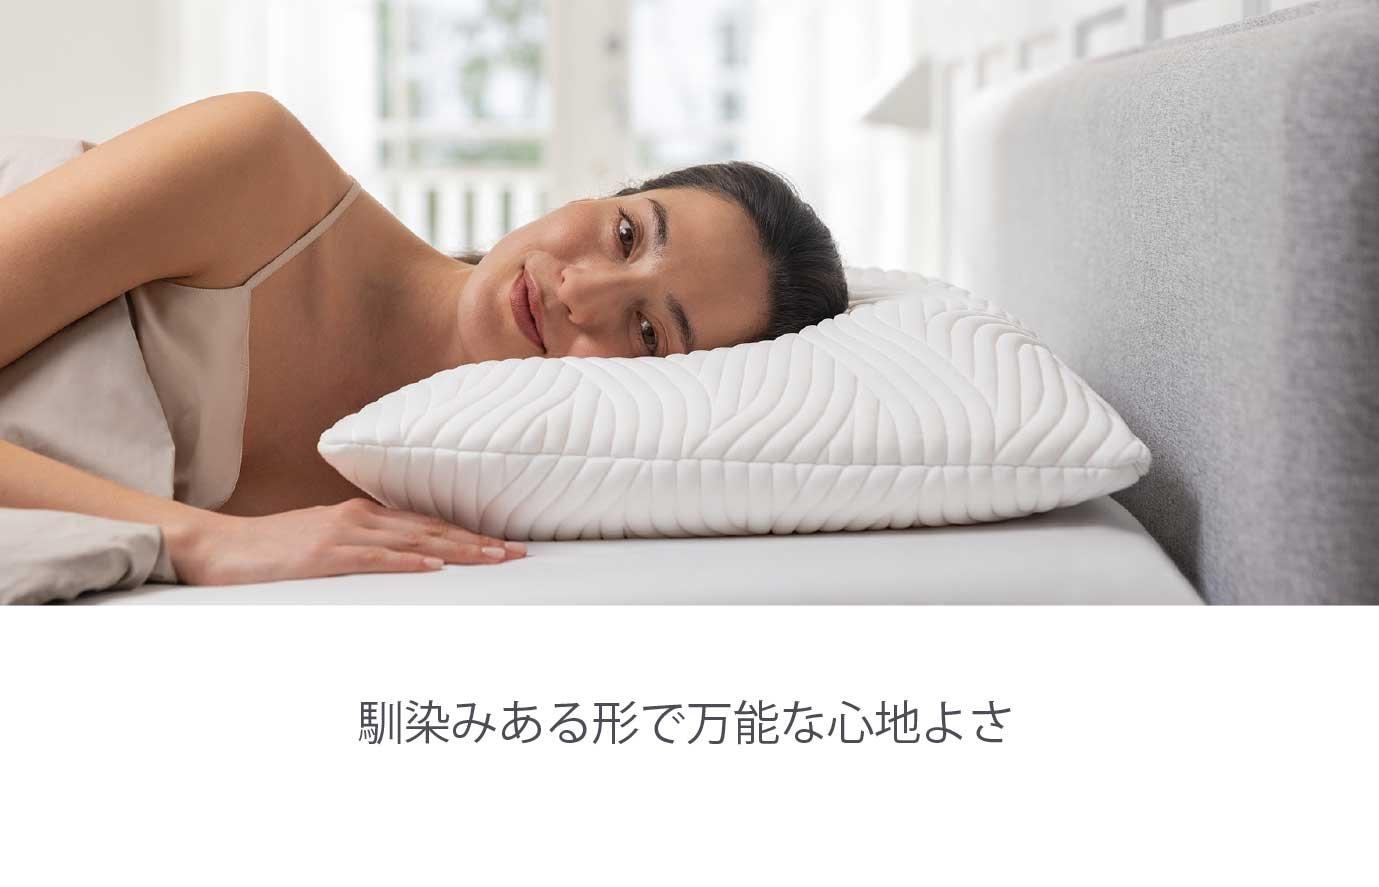 TEMPUR テンピュール枕 ミレニアムネックピロー Mサイズ かため - 寝具